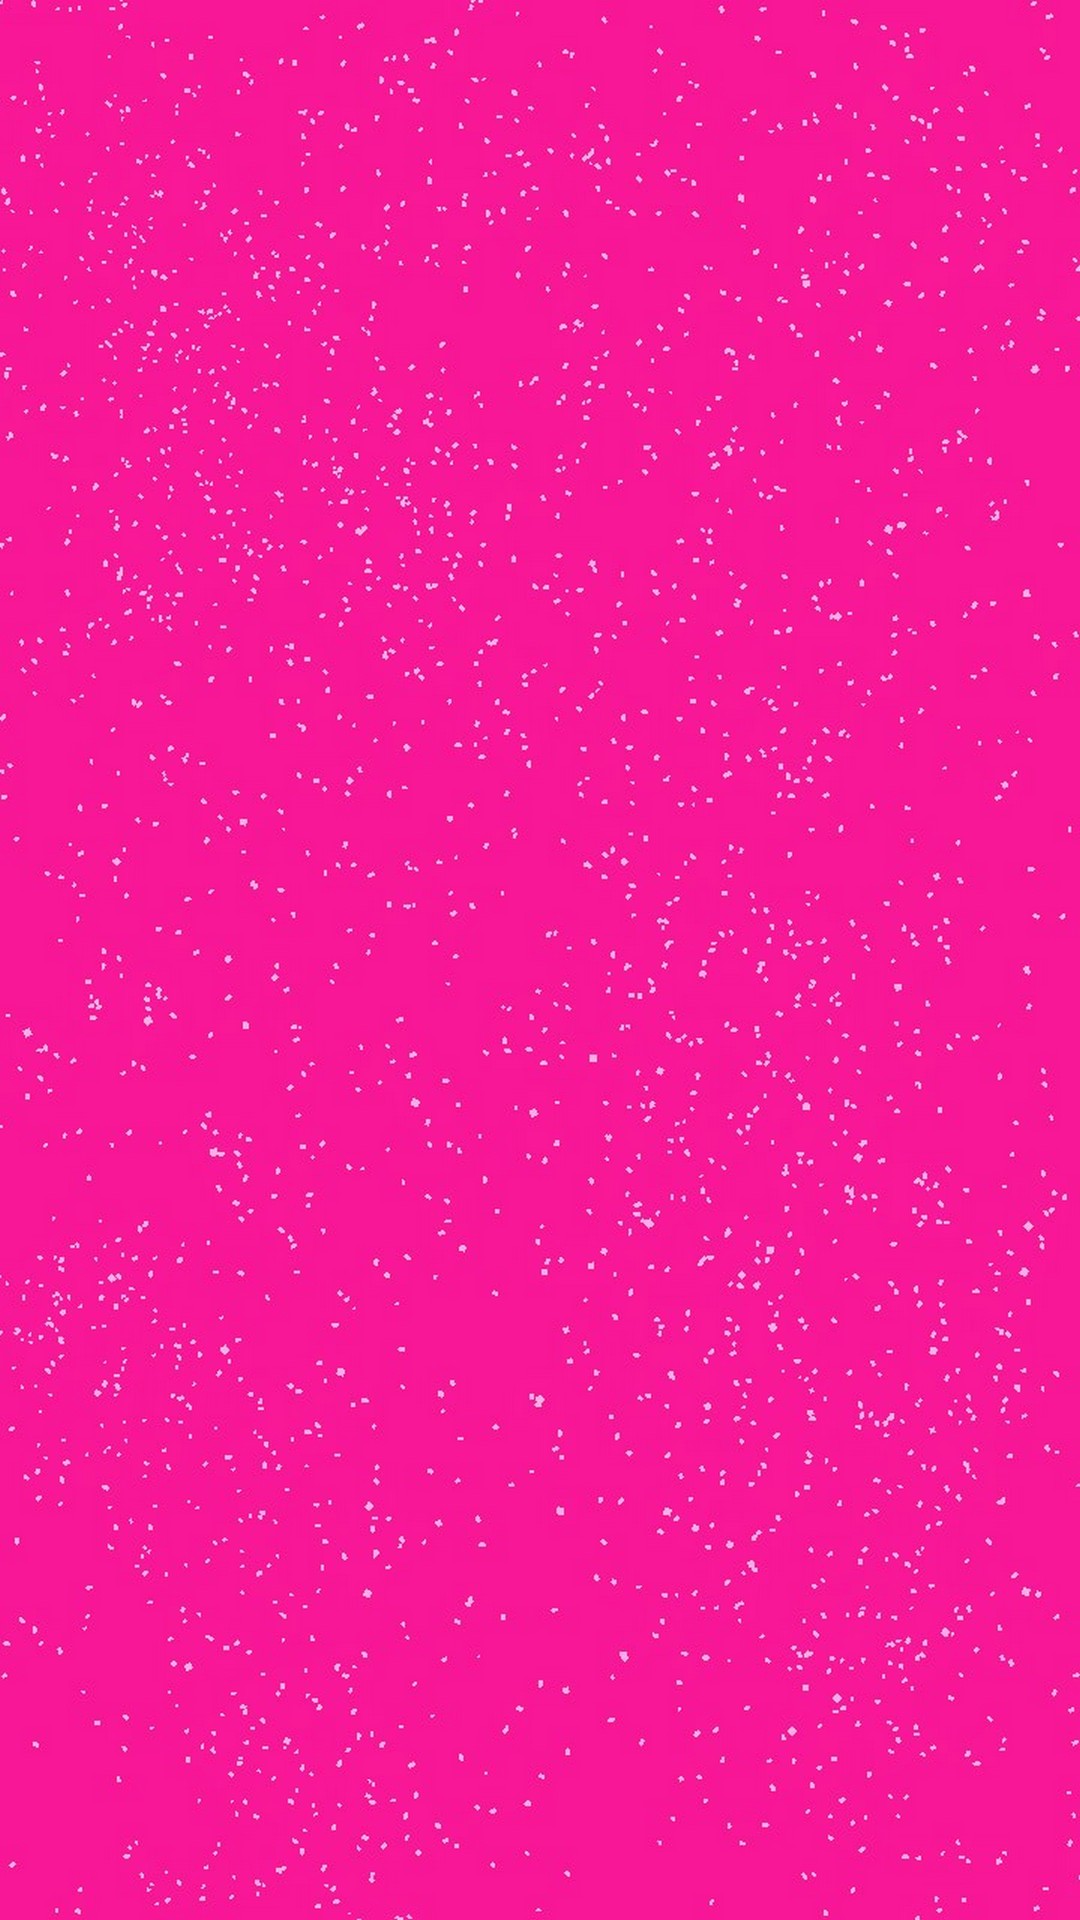 iphone pink wallpaper